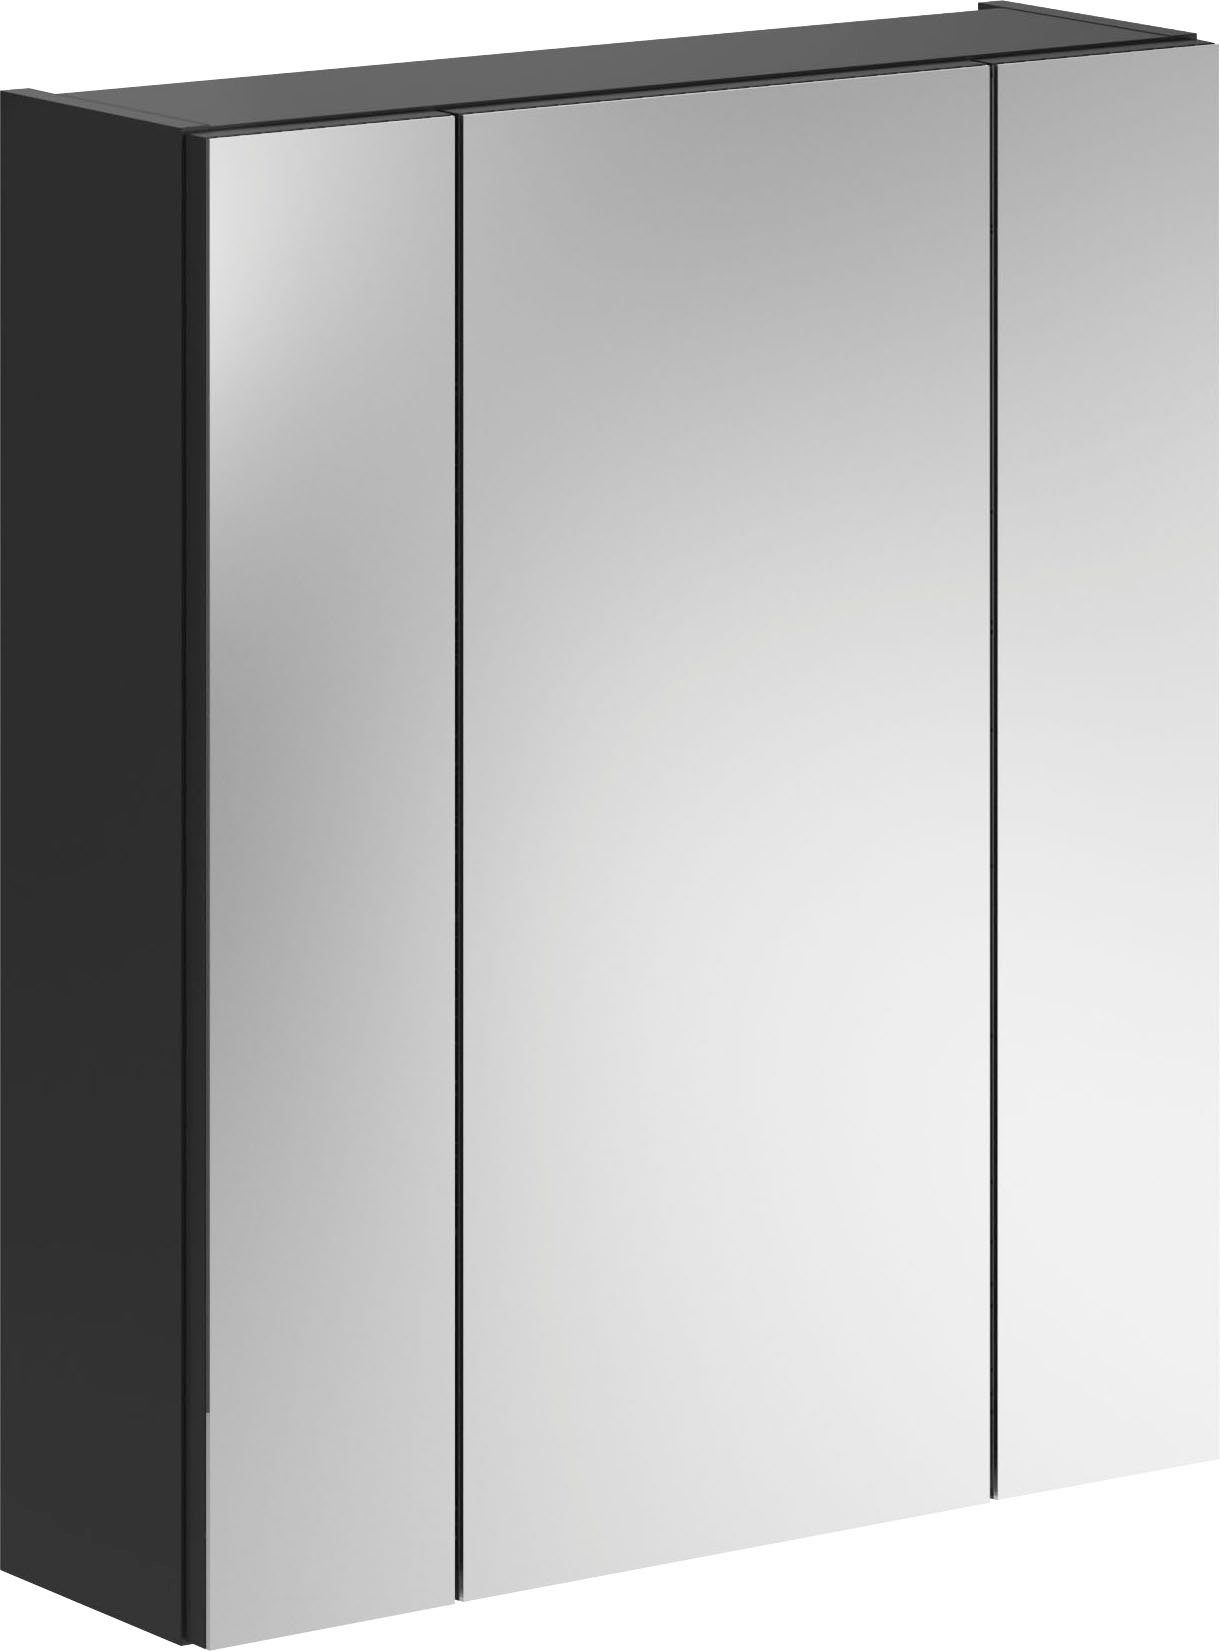 inosign badkamerspiegelkast malmoe badkamermeubel, spiegelkast, breedte 60 cm zwart